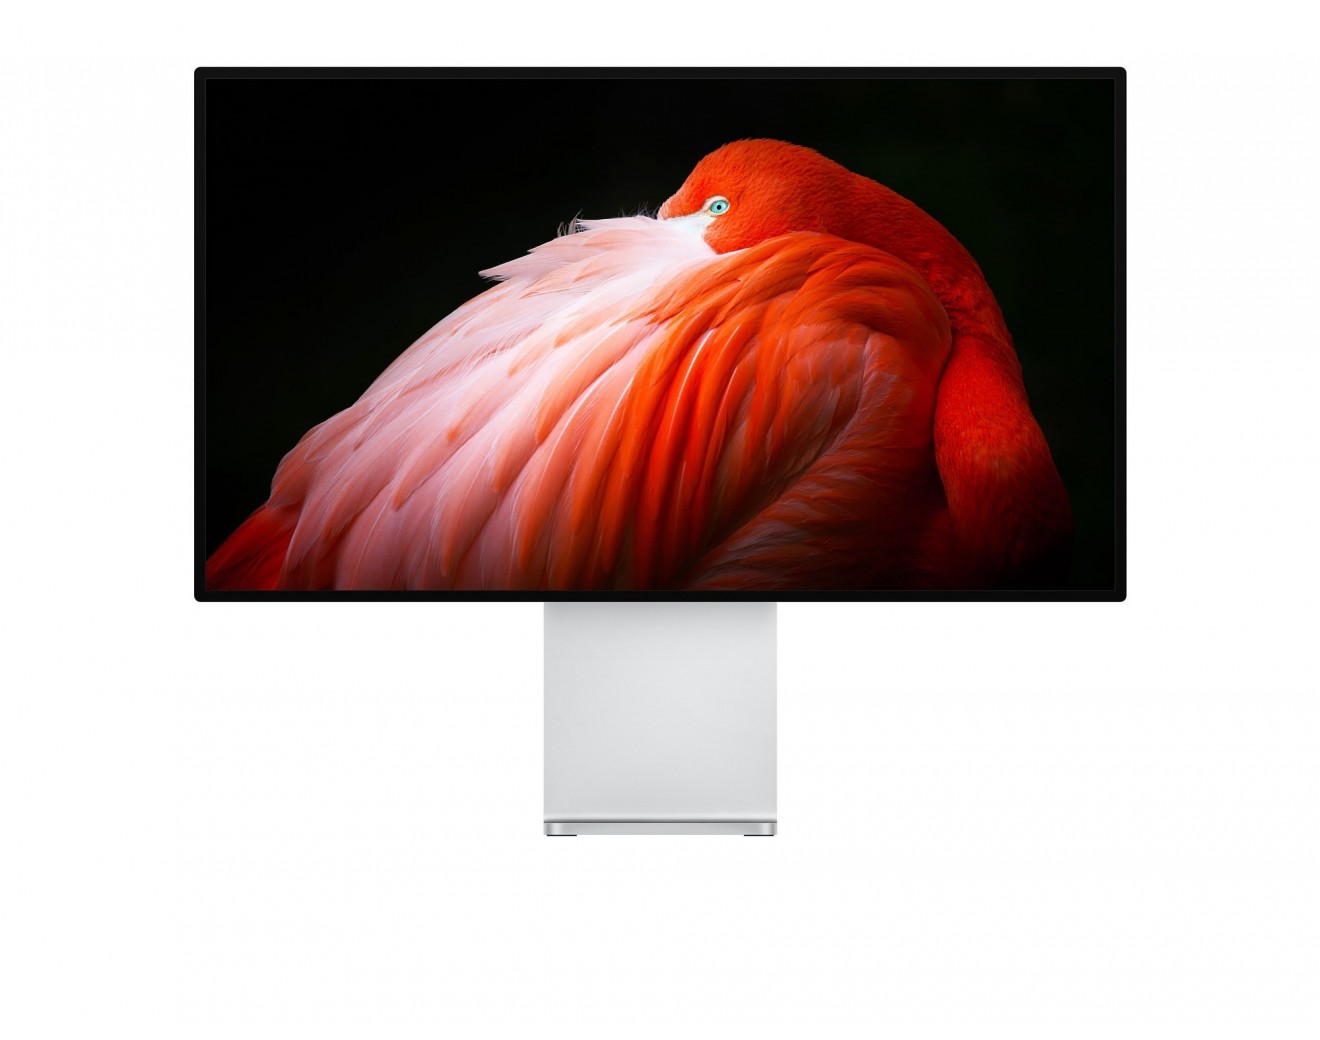 Монитор Apple Pro Display XDR - Standard glass